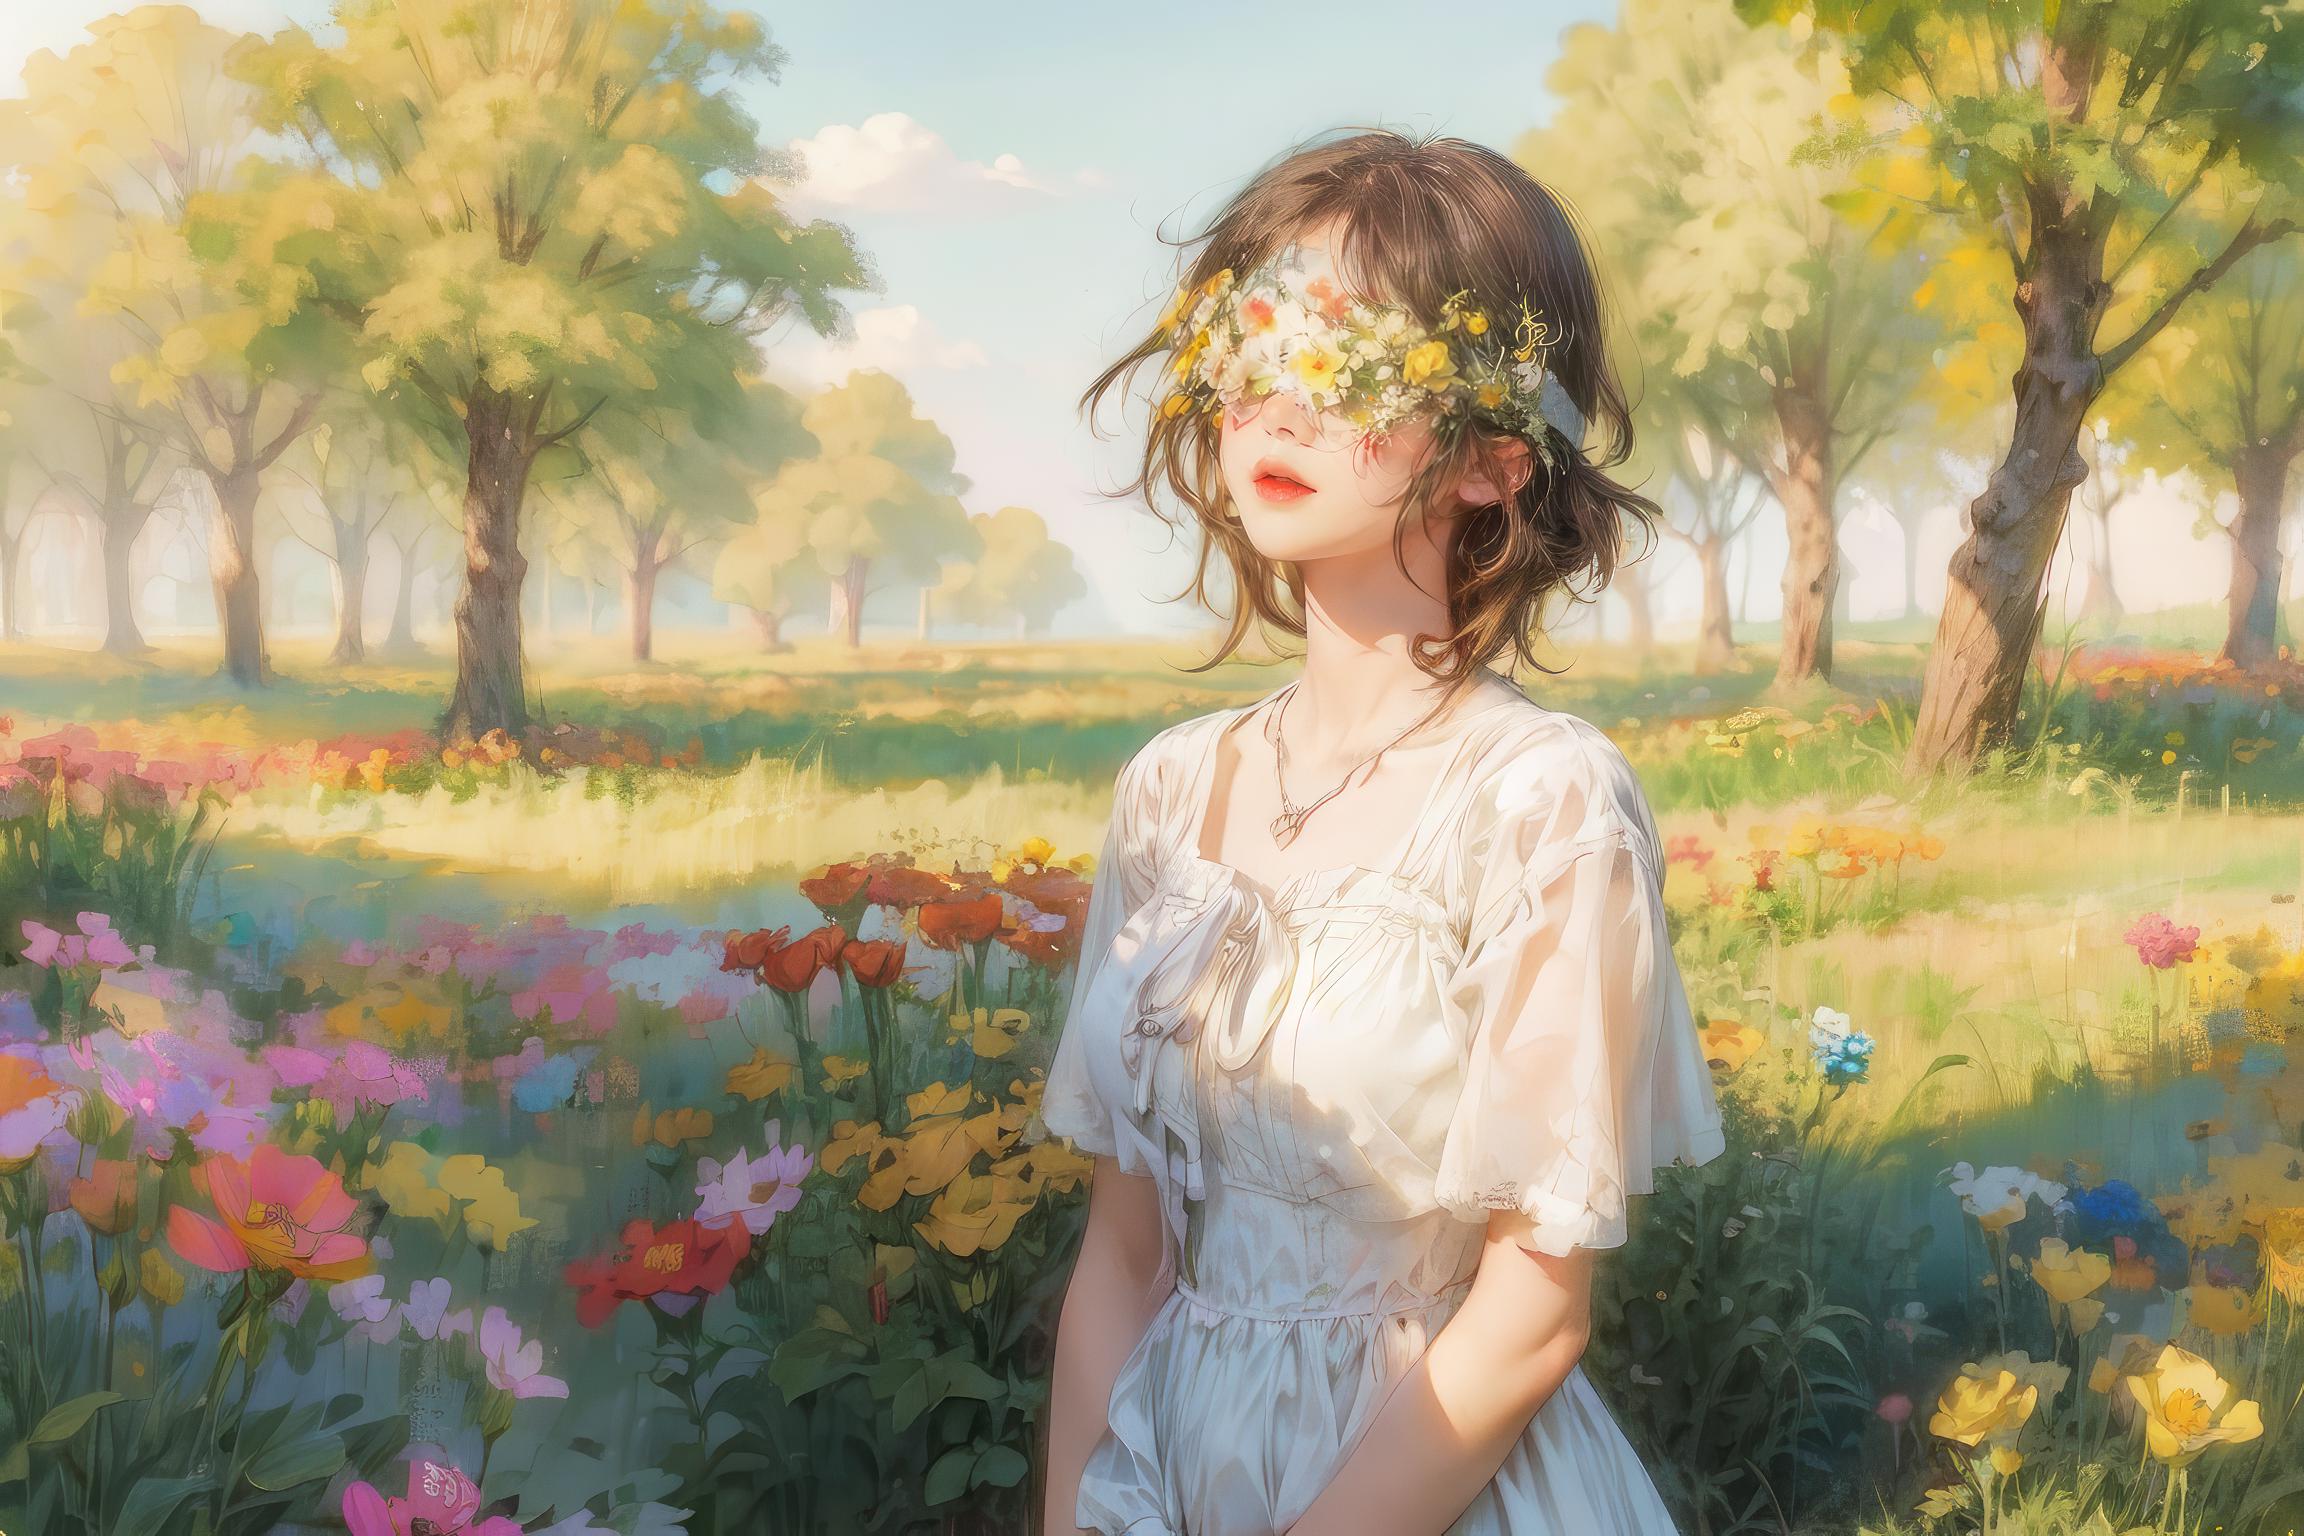 Flower Blindfold | 花眼罩 | 花の目隠し | Sora SD1.5 image by Sheephappy